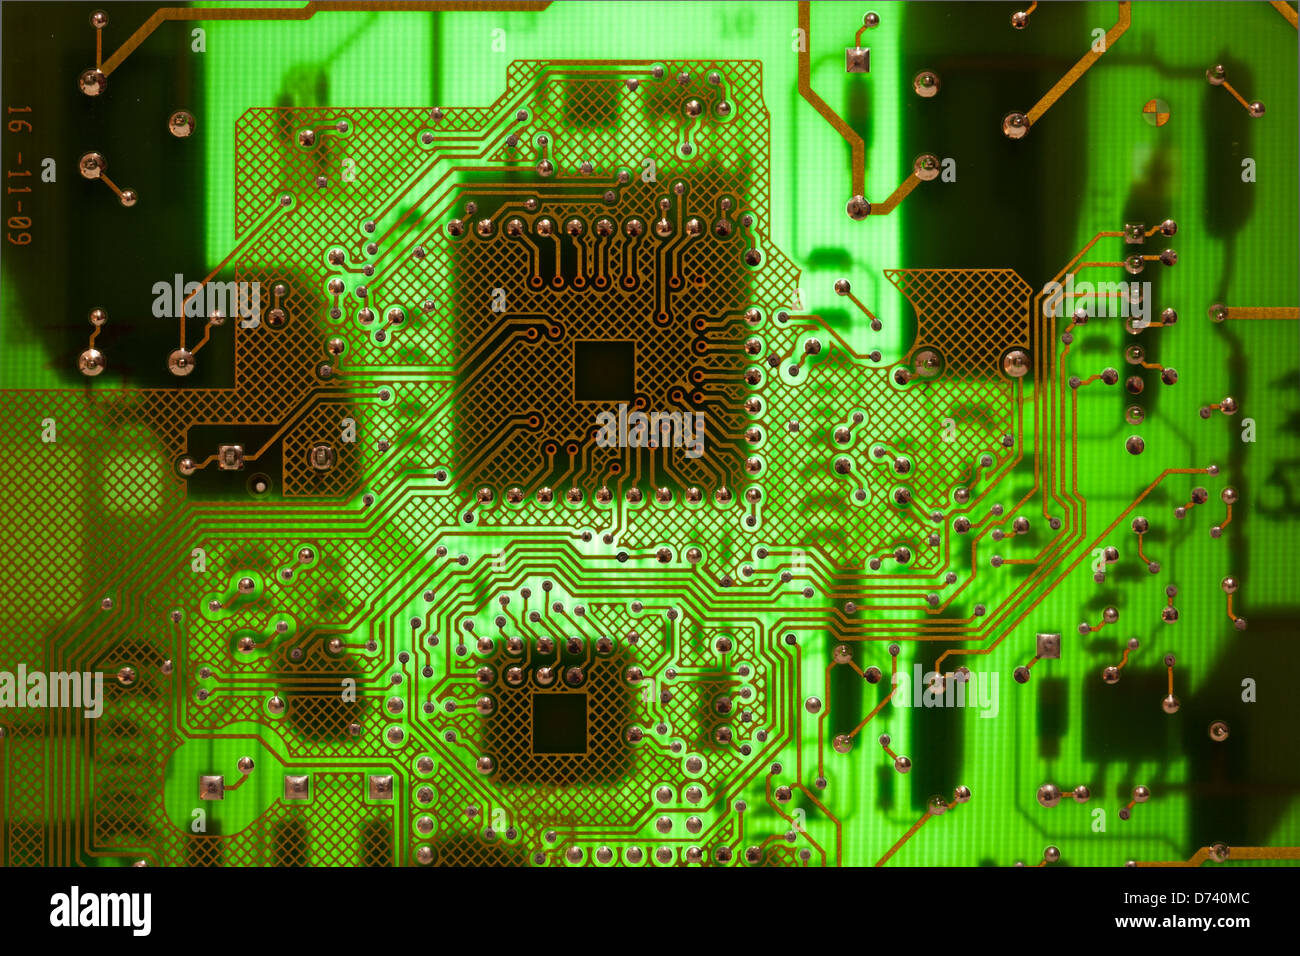 Circuit board or pcb in green light like the Matrix film Stock Photo